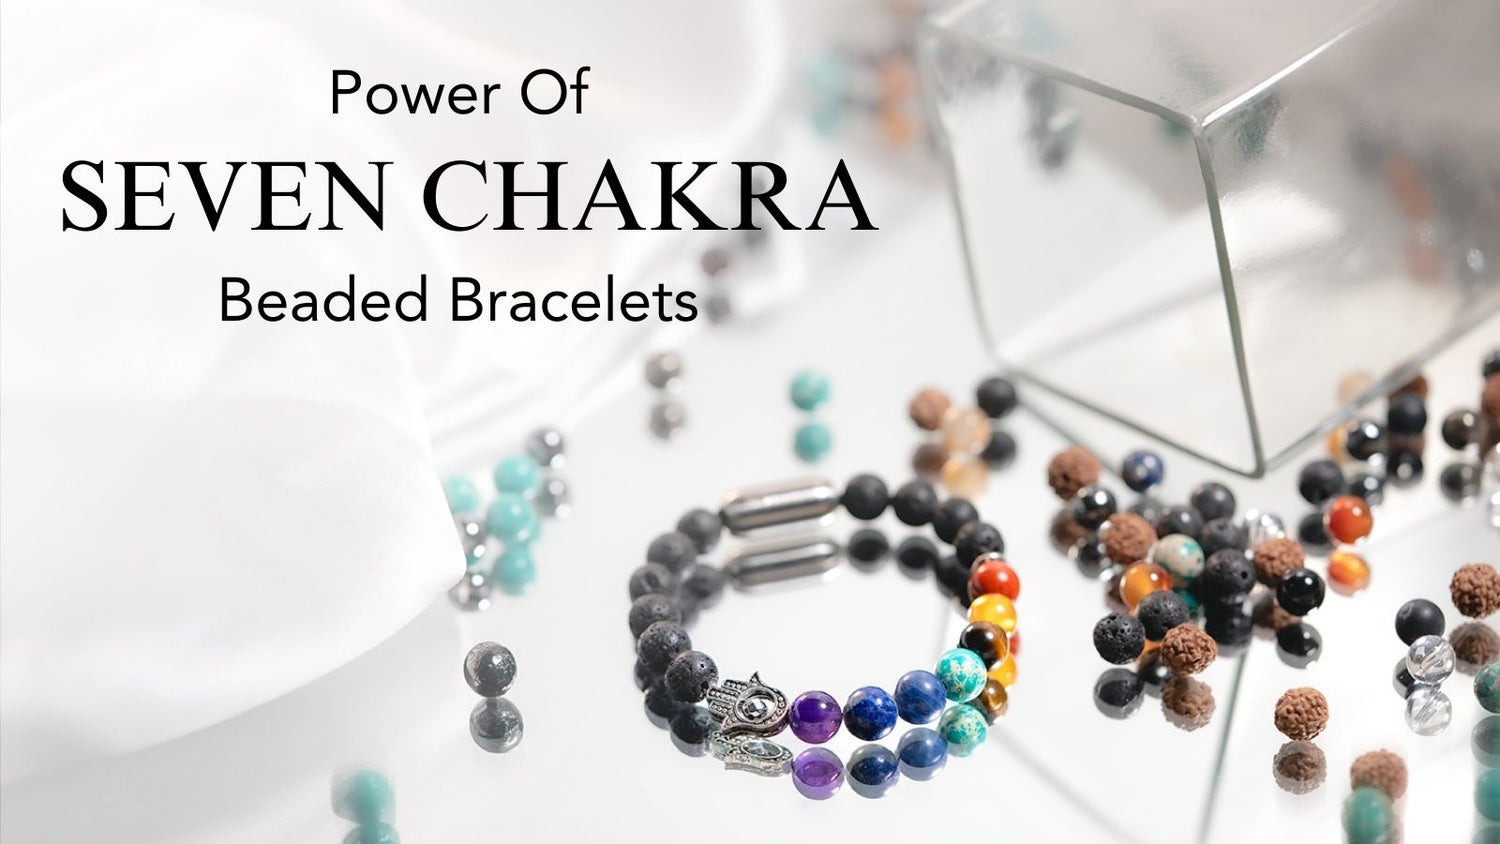 Healing and Balancing: The Power of Seven Chakra Beaded Stones